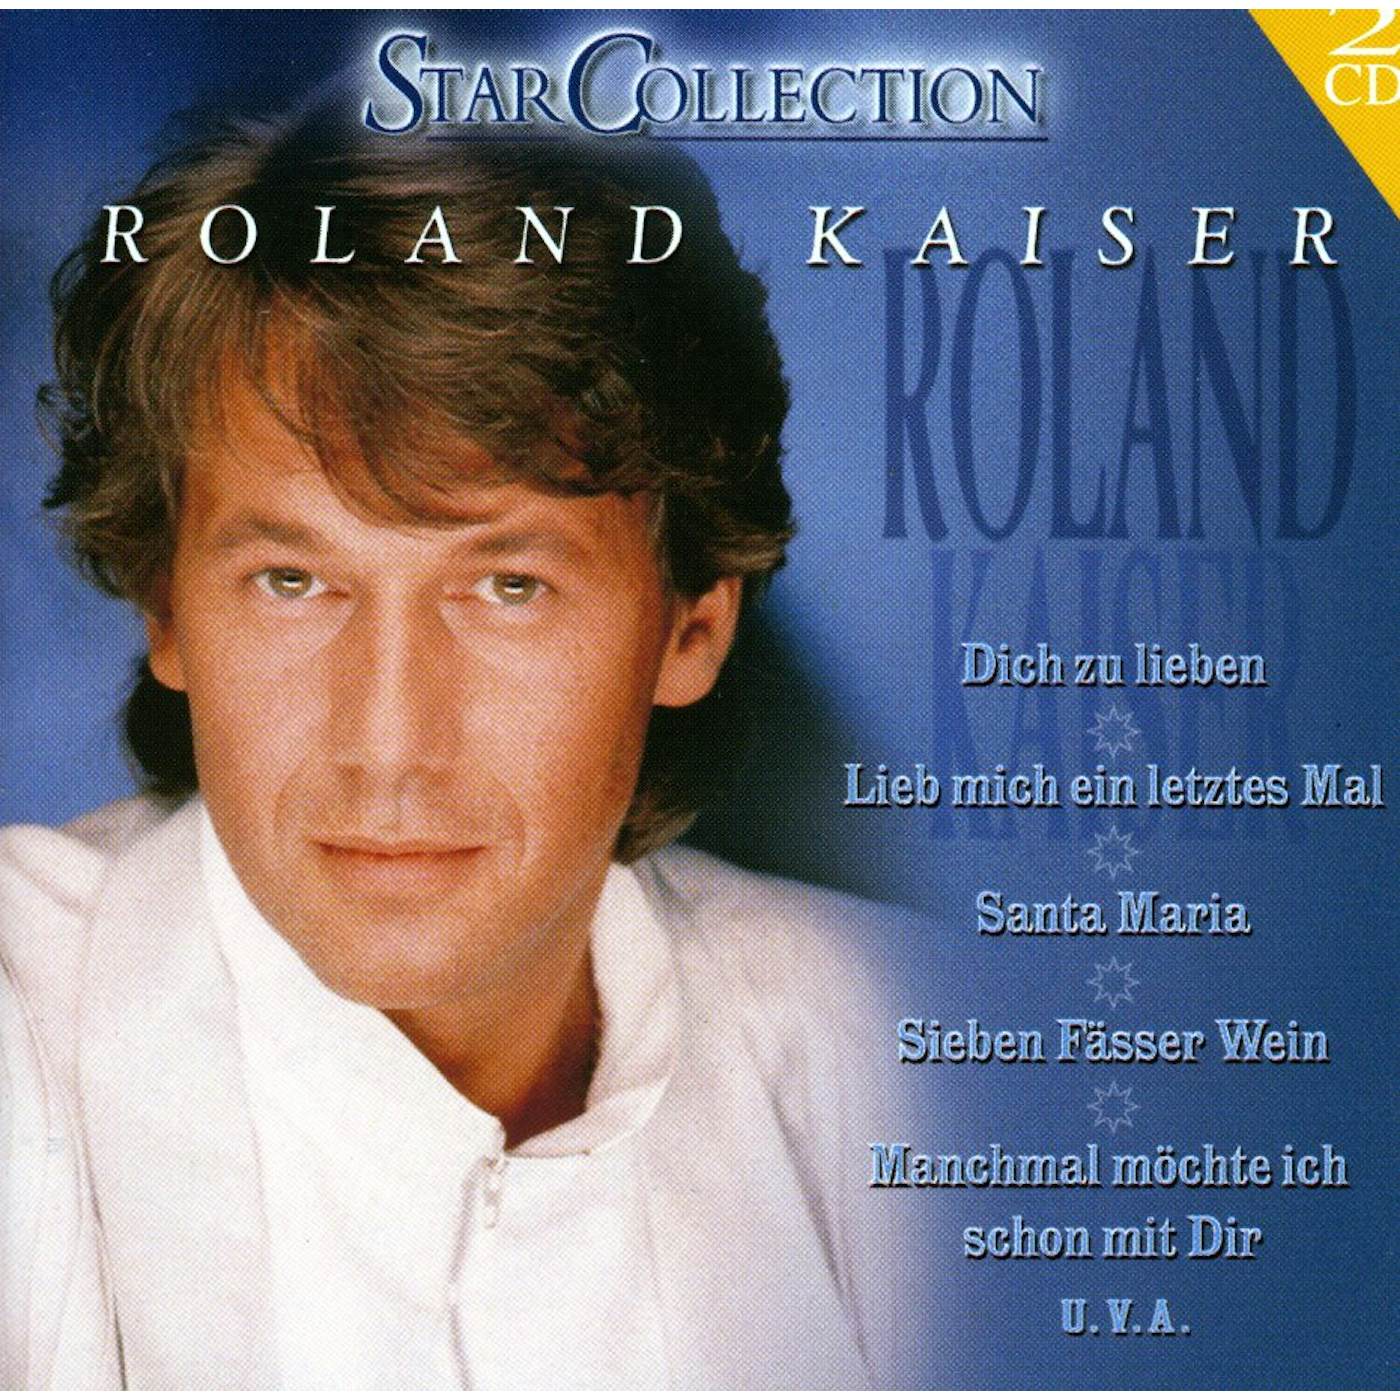 Roland Kaiser STARCOLLECTION CD